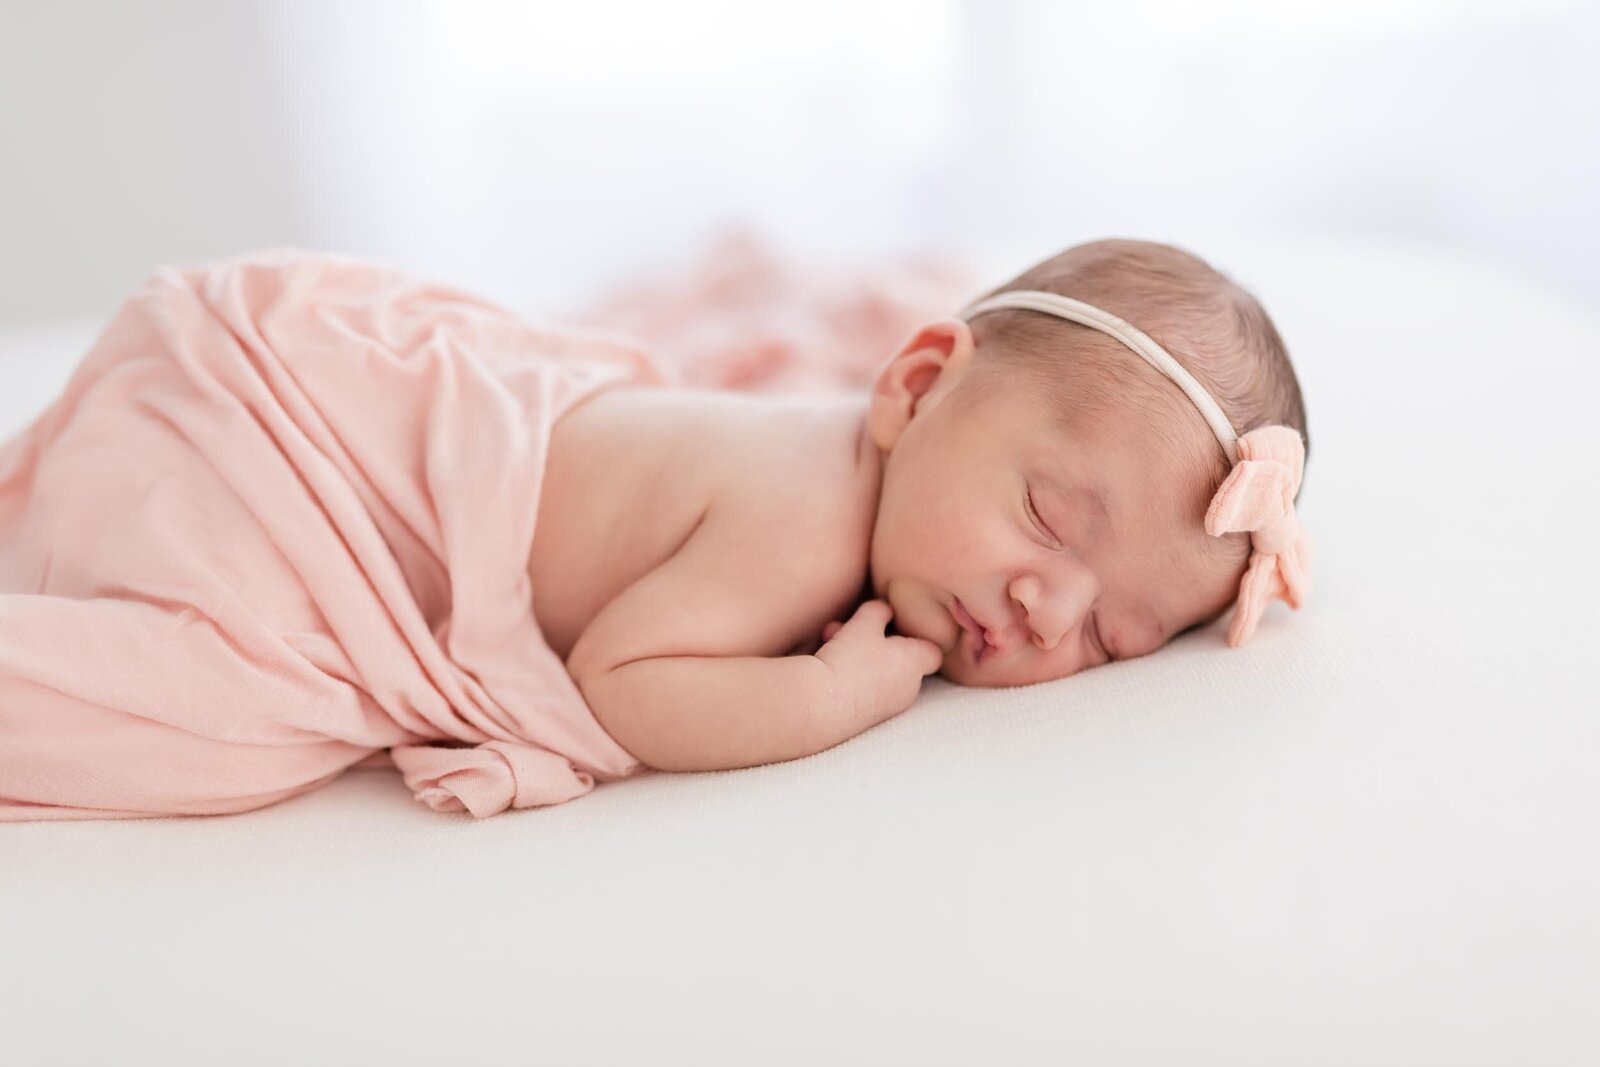 orlando photographer offering in studio newborn photography